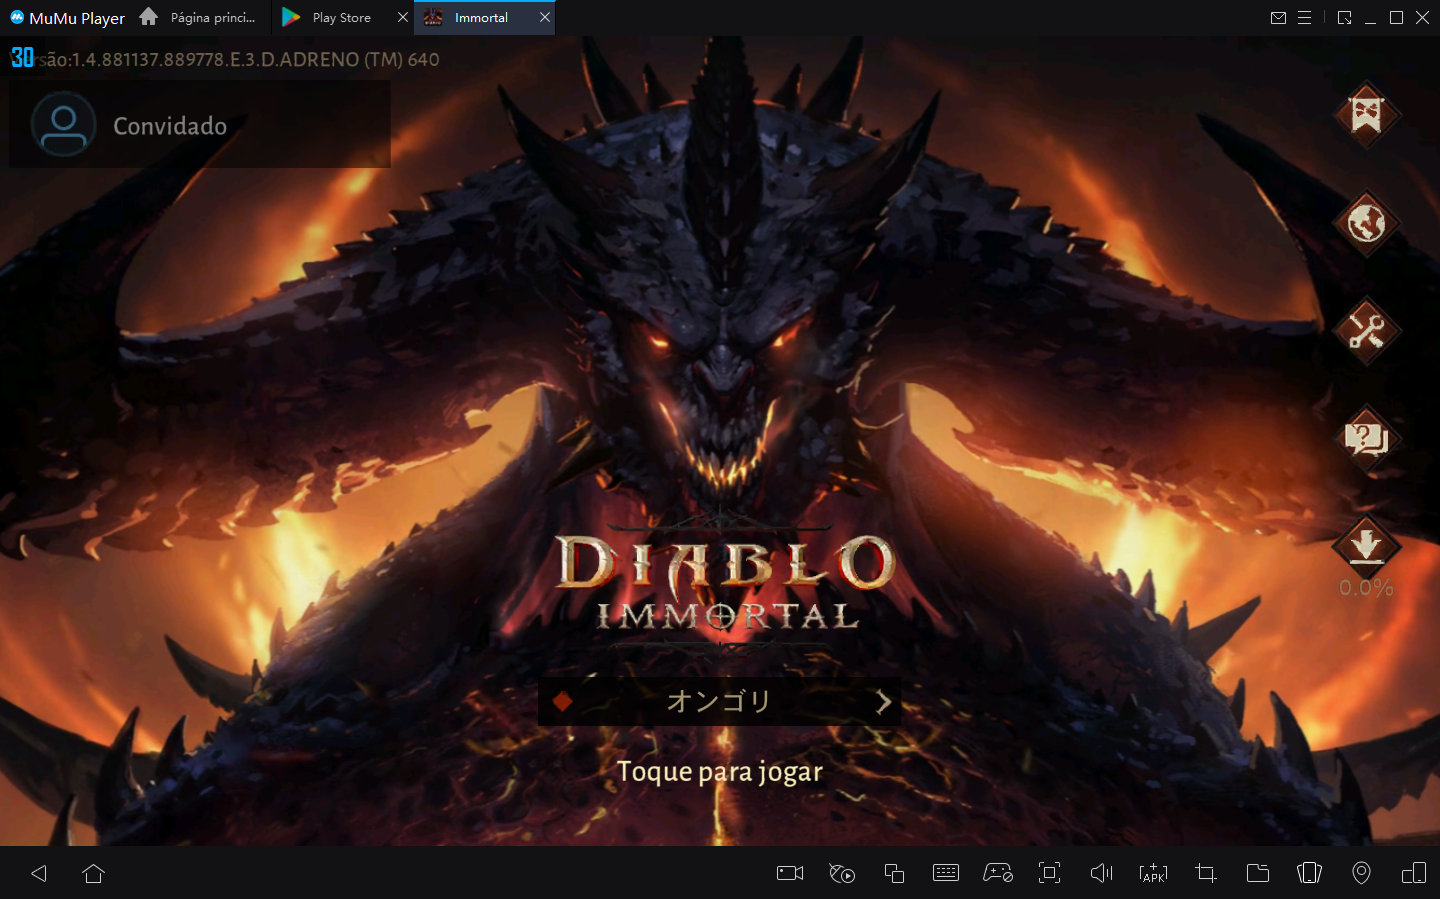 Como jogar Diablo Immortal no PC com Emulador Android